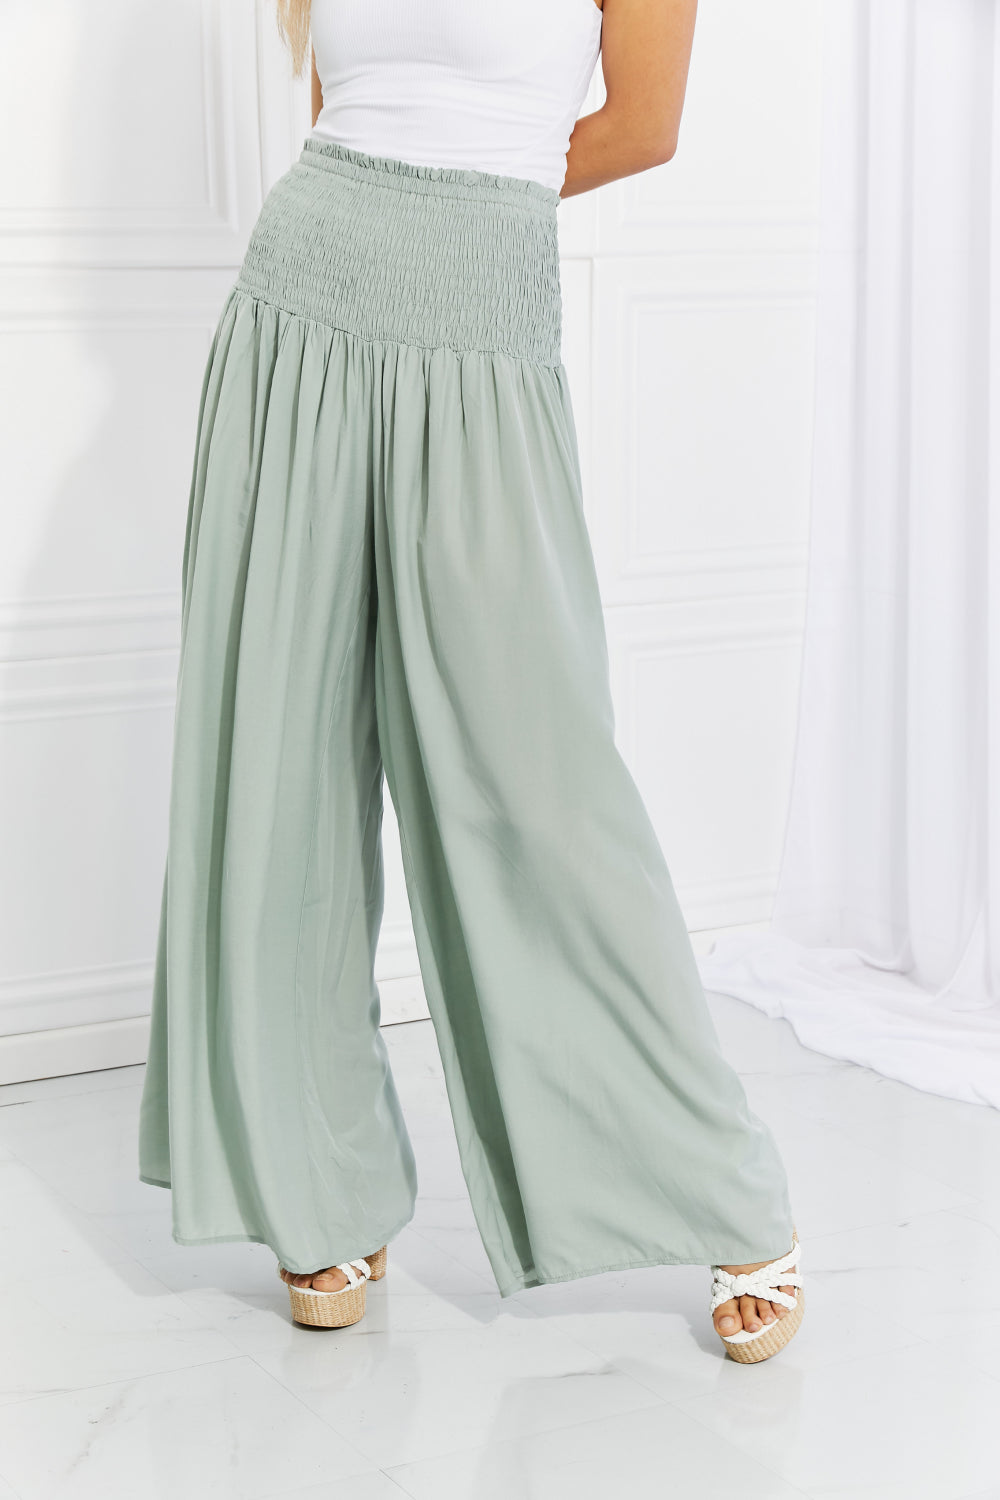 Summer Outfits | HEYSON Full Size Beautiful You Smocked Palazzo Pants